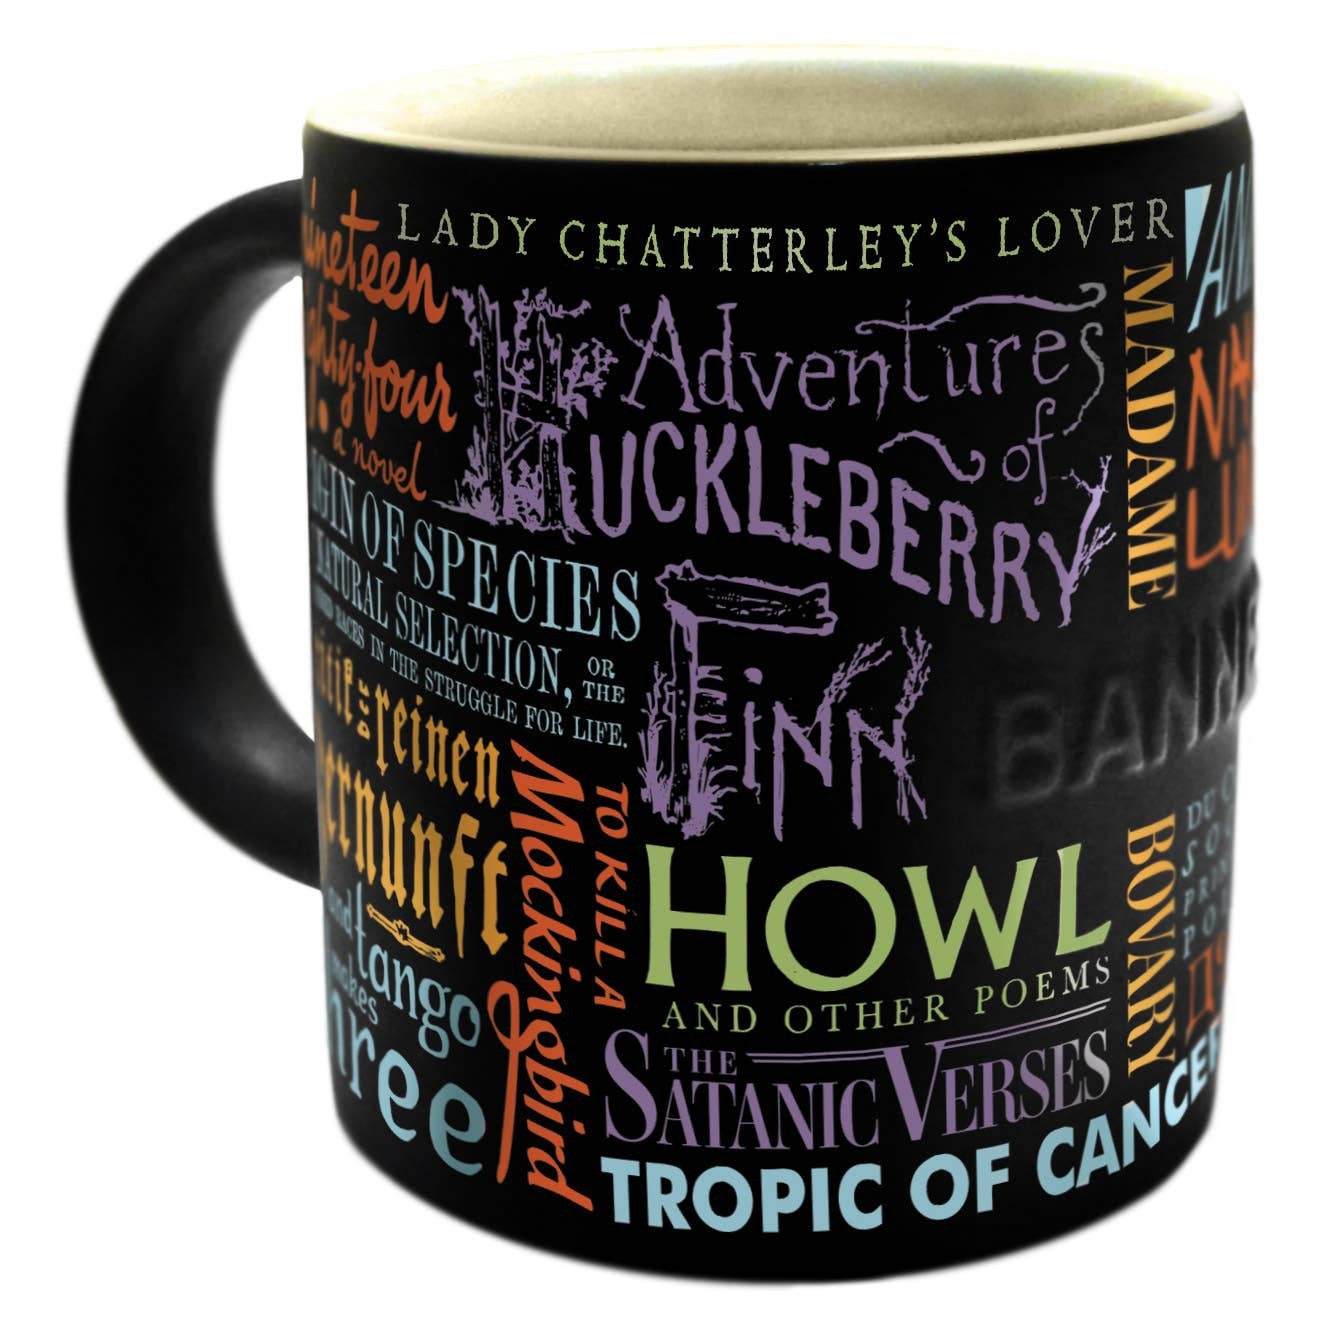 Banned Books Coffee Mug in Gift Box | Novelty Ceramic Tea Coffee Cup | 12oz